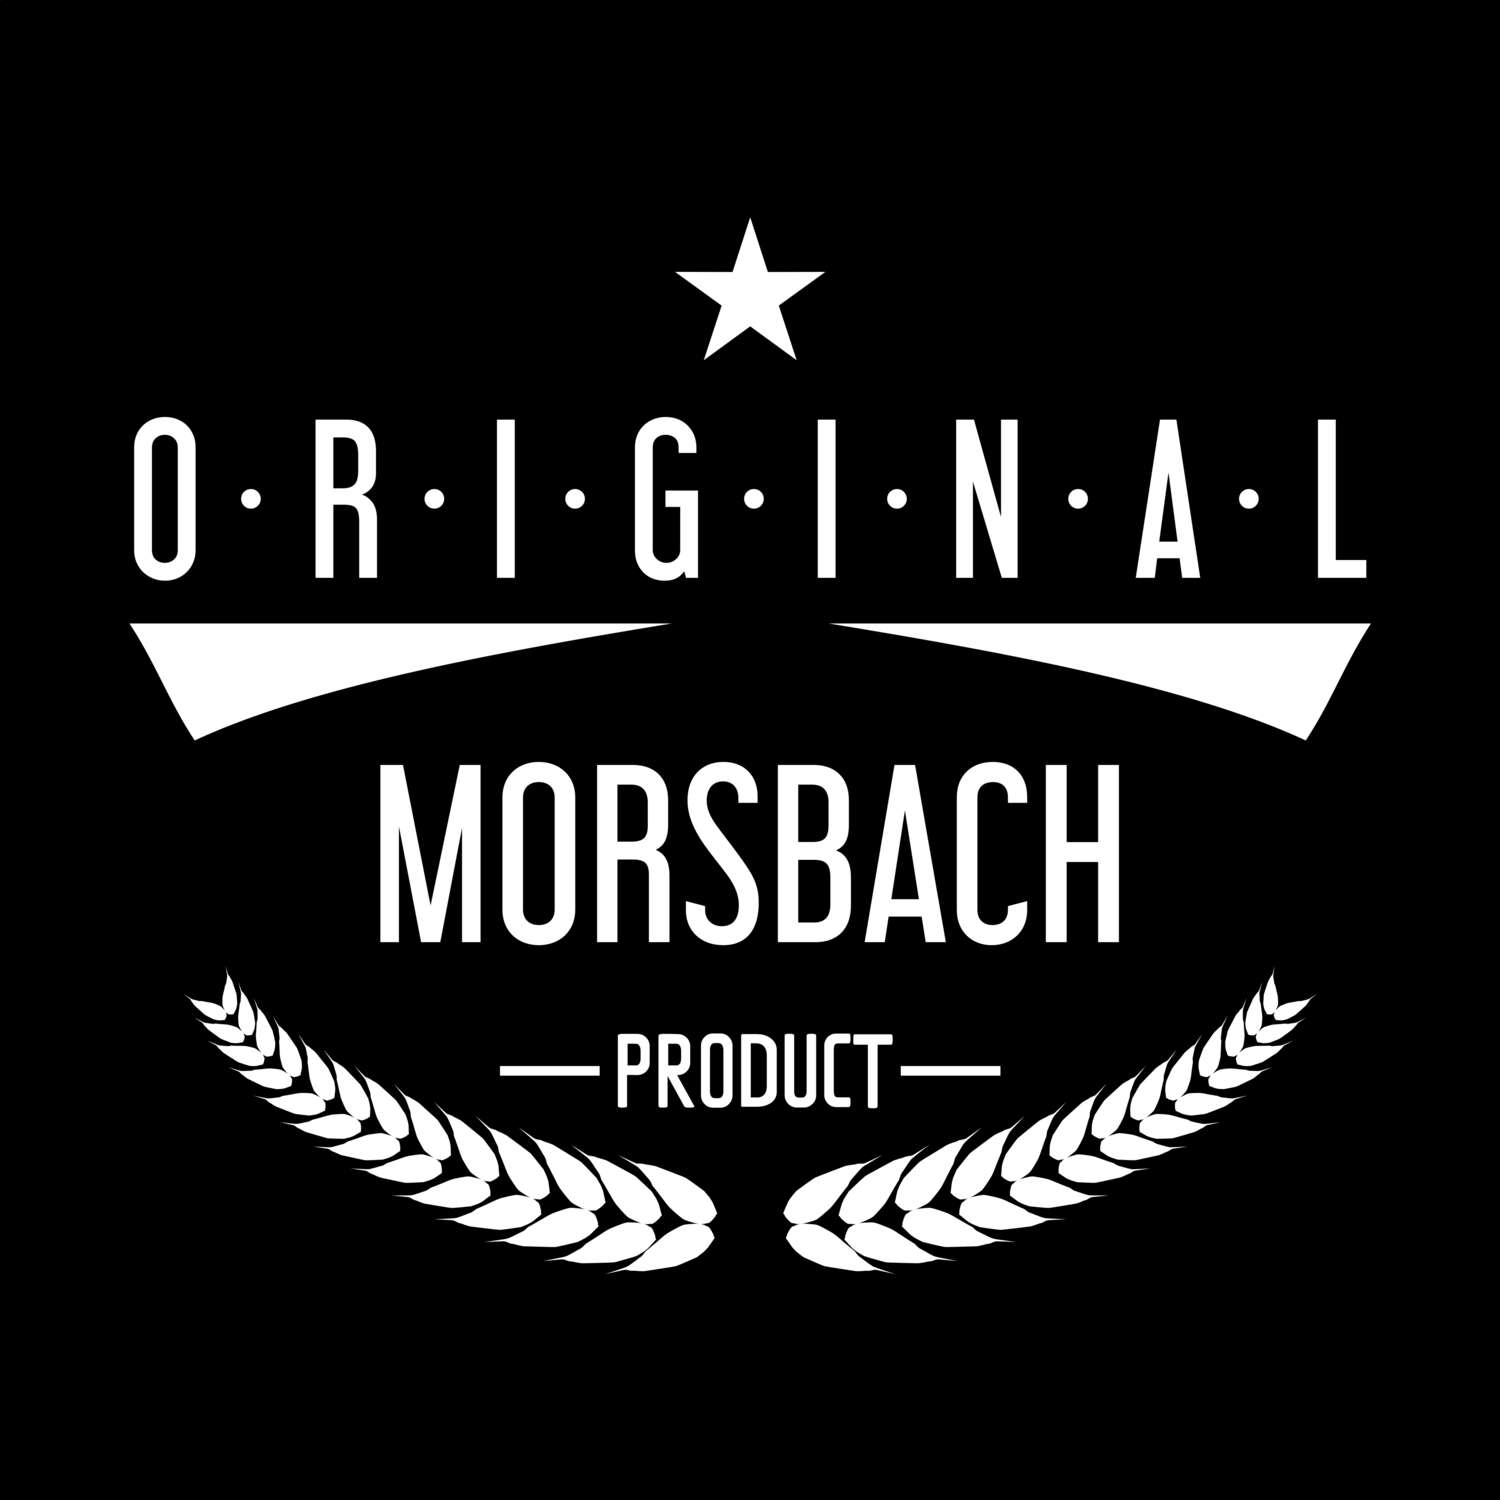 Morsbach T-Shirt »Original Product«